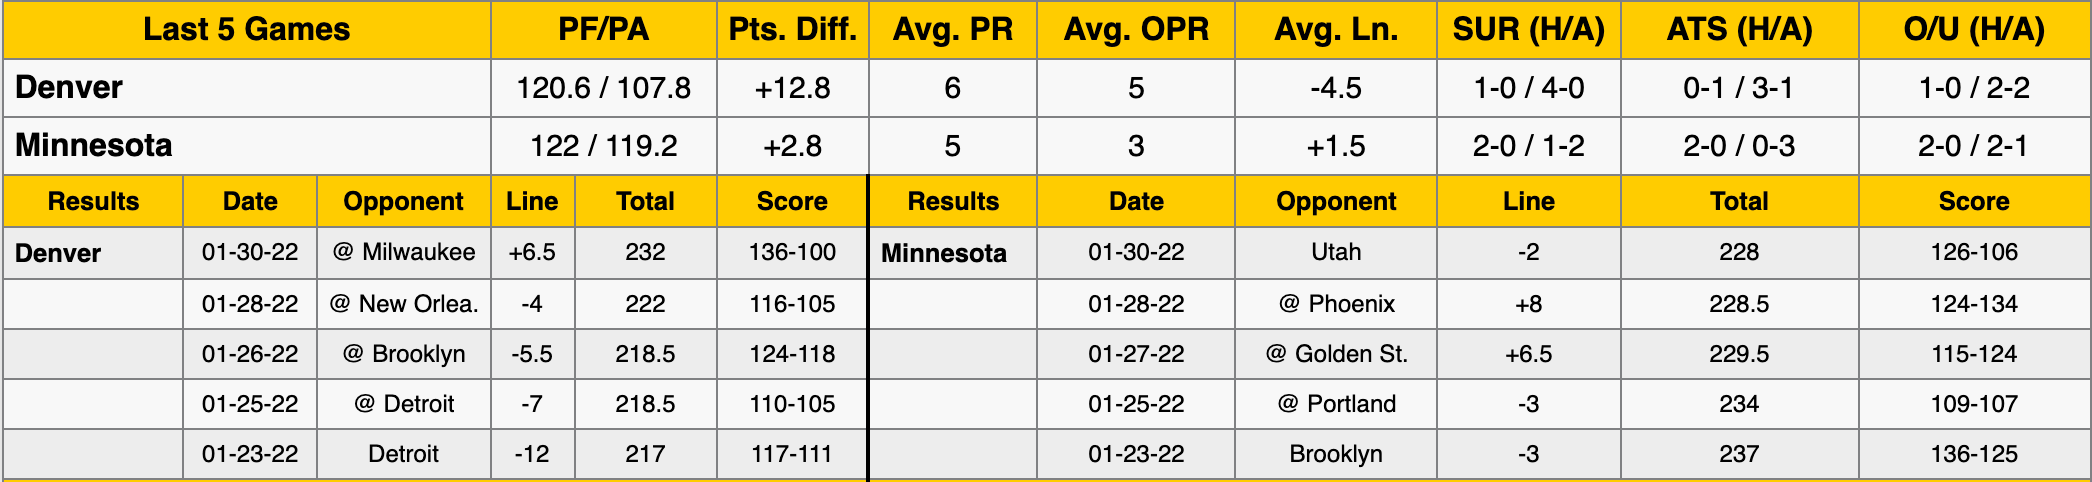 Denver Nuggets vs Minnesota Timberwolves Stats